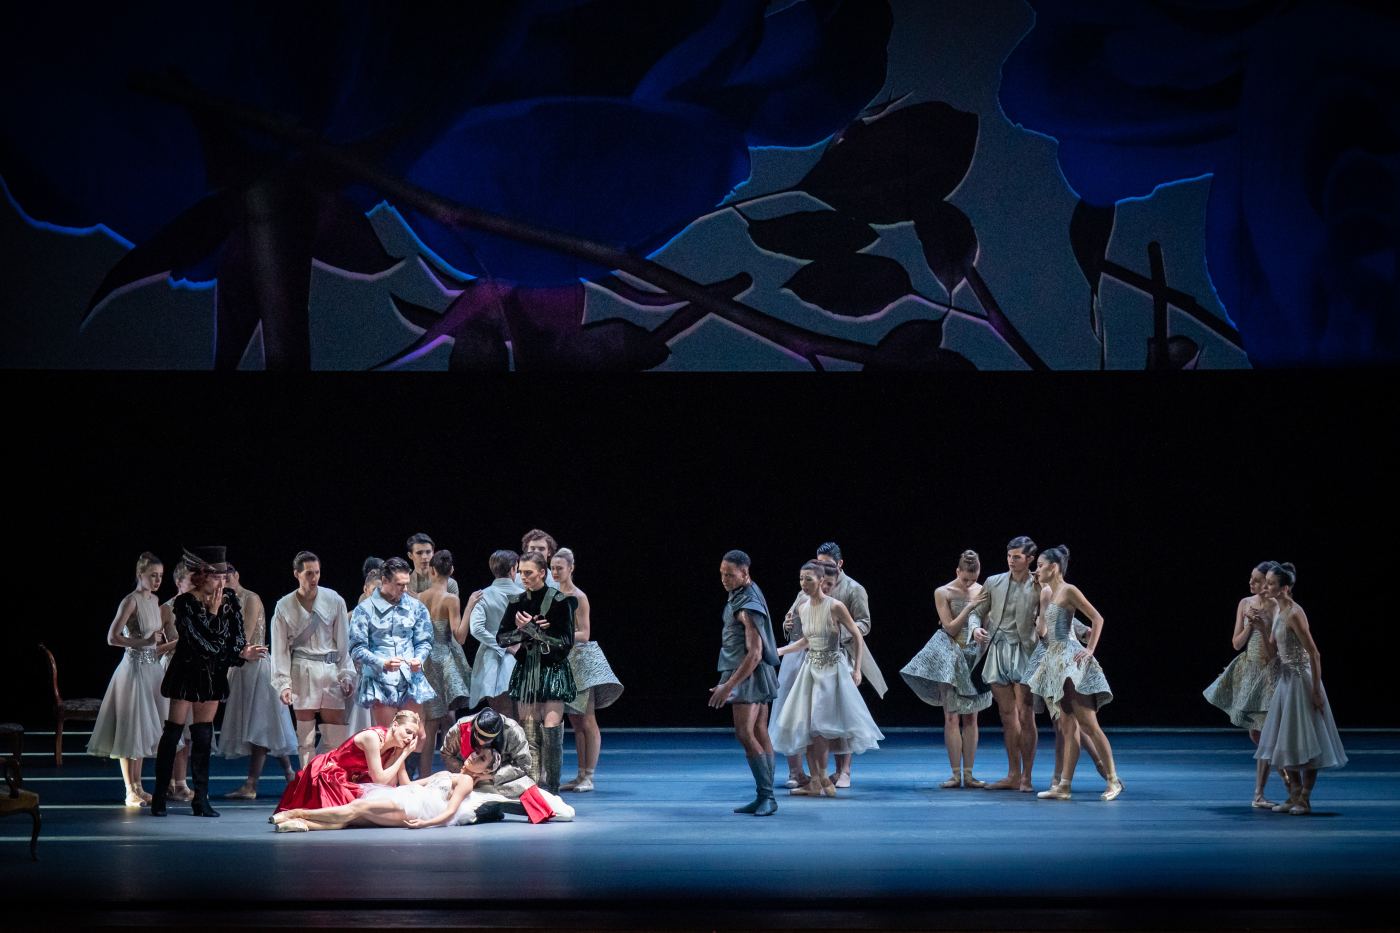 7. O.Esina (Queen), H.-J.Kang (Princess Aurora), M.Kimoto (King), and ensemble, “The Sleeping Beauty” by M.Schläpfer and M.Petipa, Vienna State Ballet 2022 © Vienna State Ballet / A.Taylor